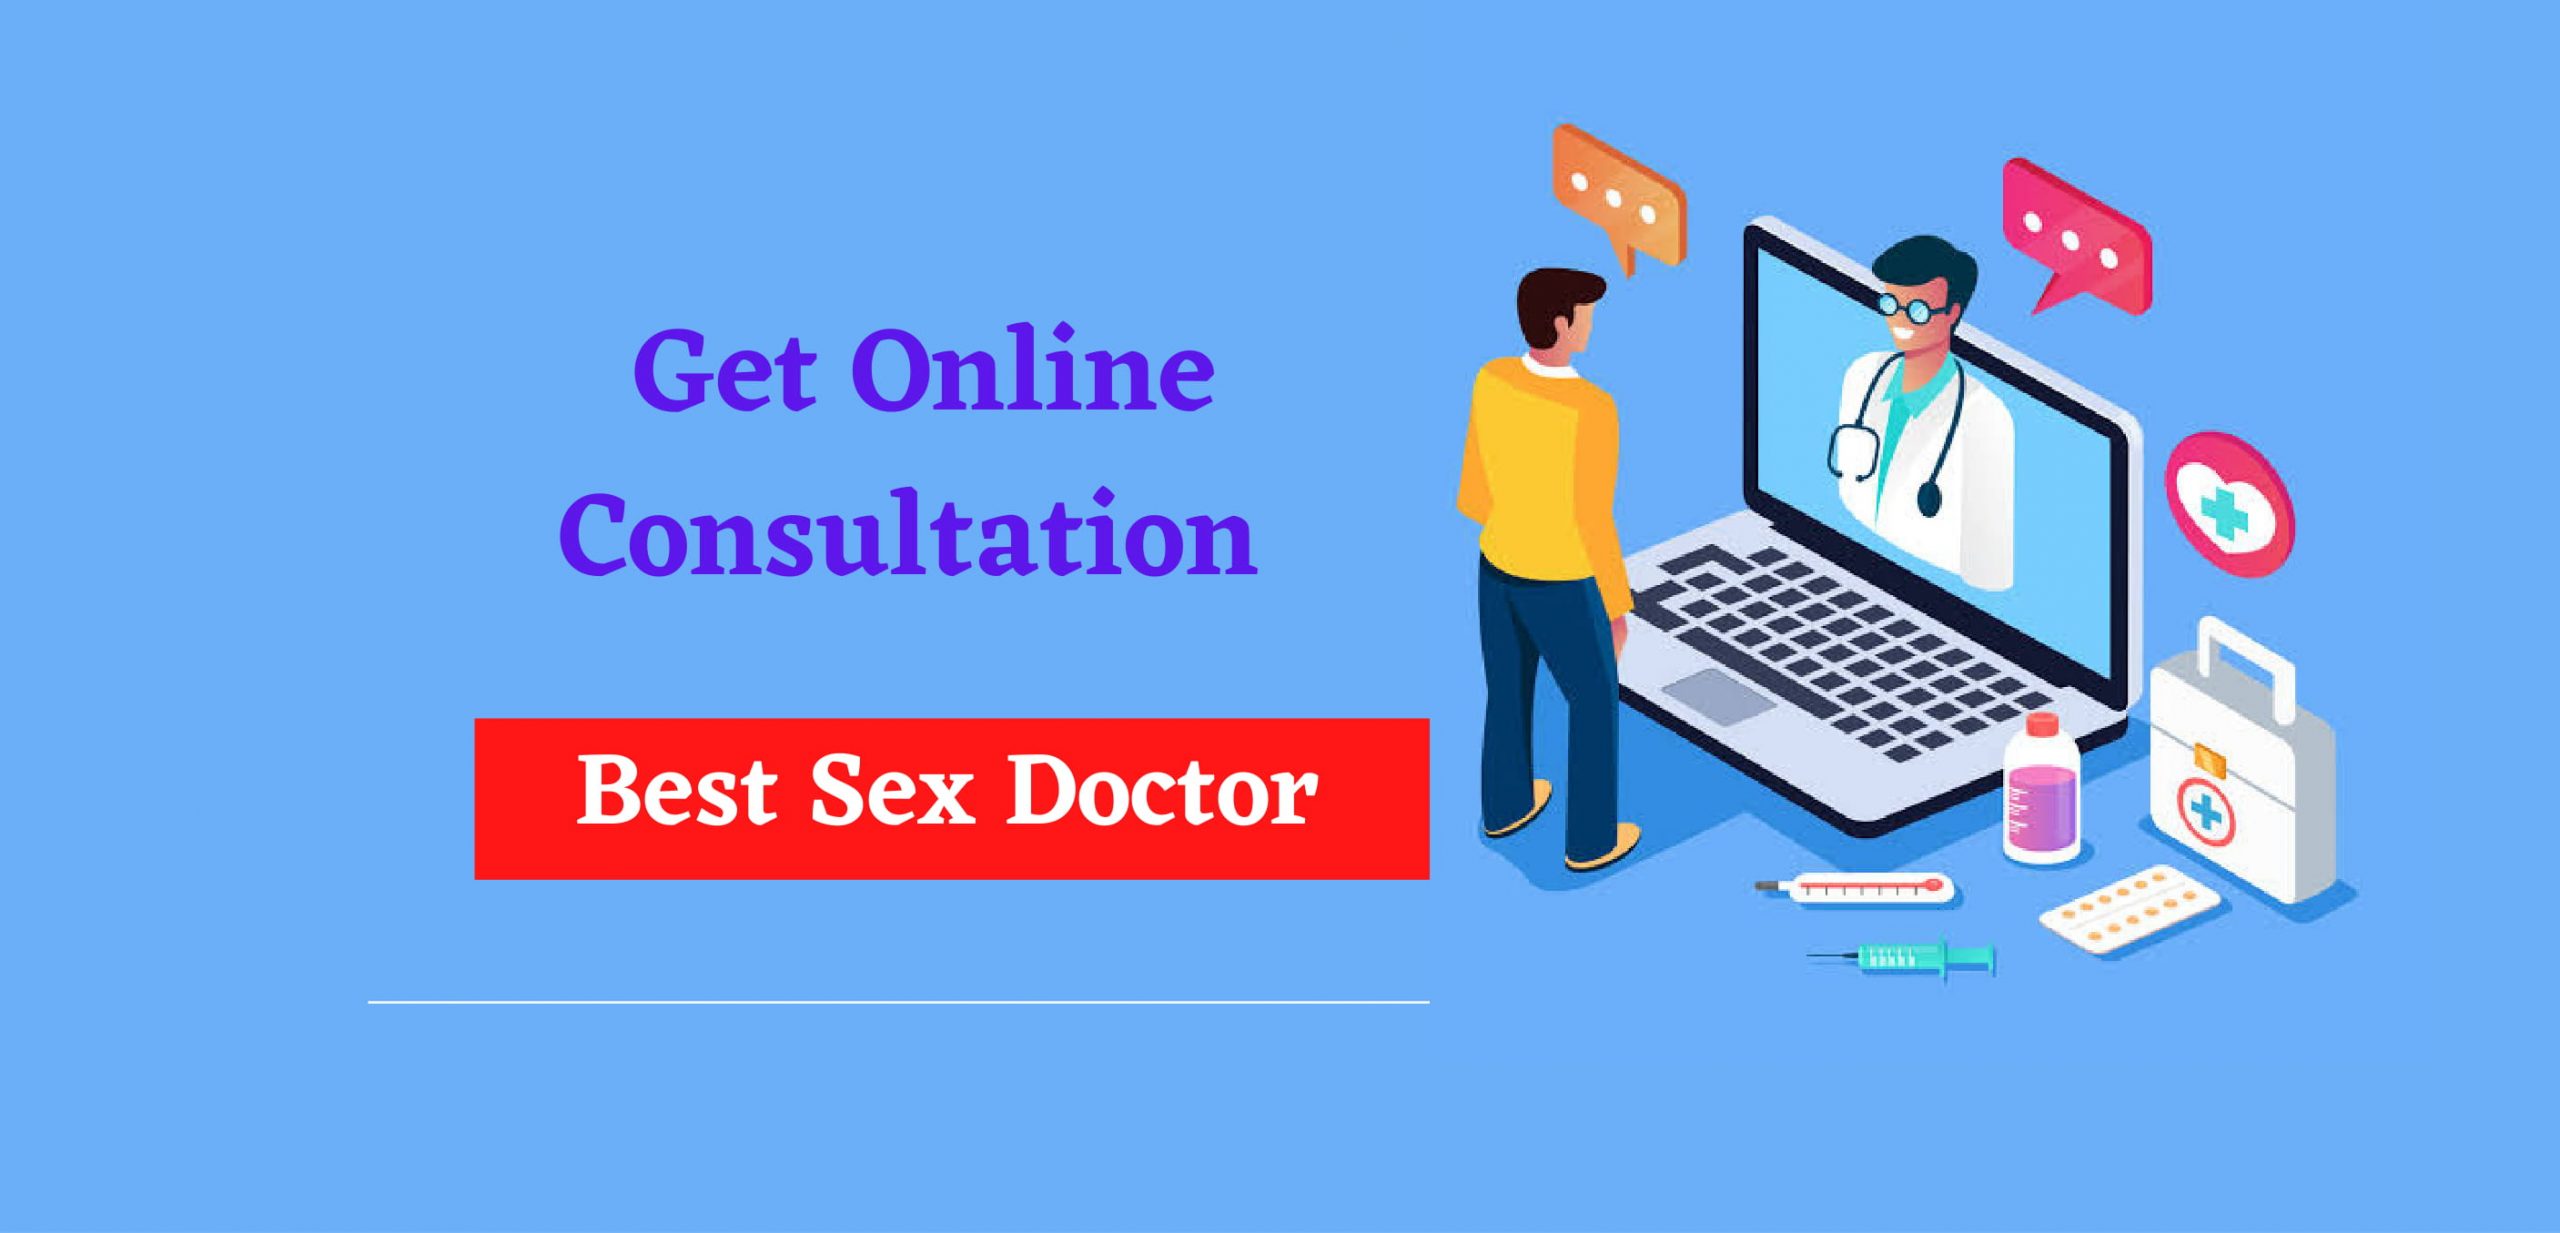 Get Online Consultation, best sex doctor